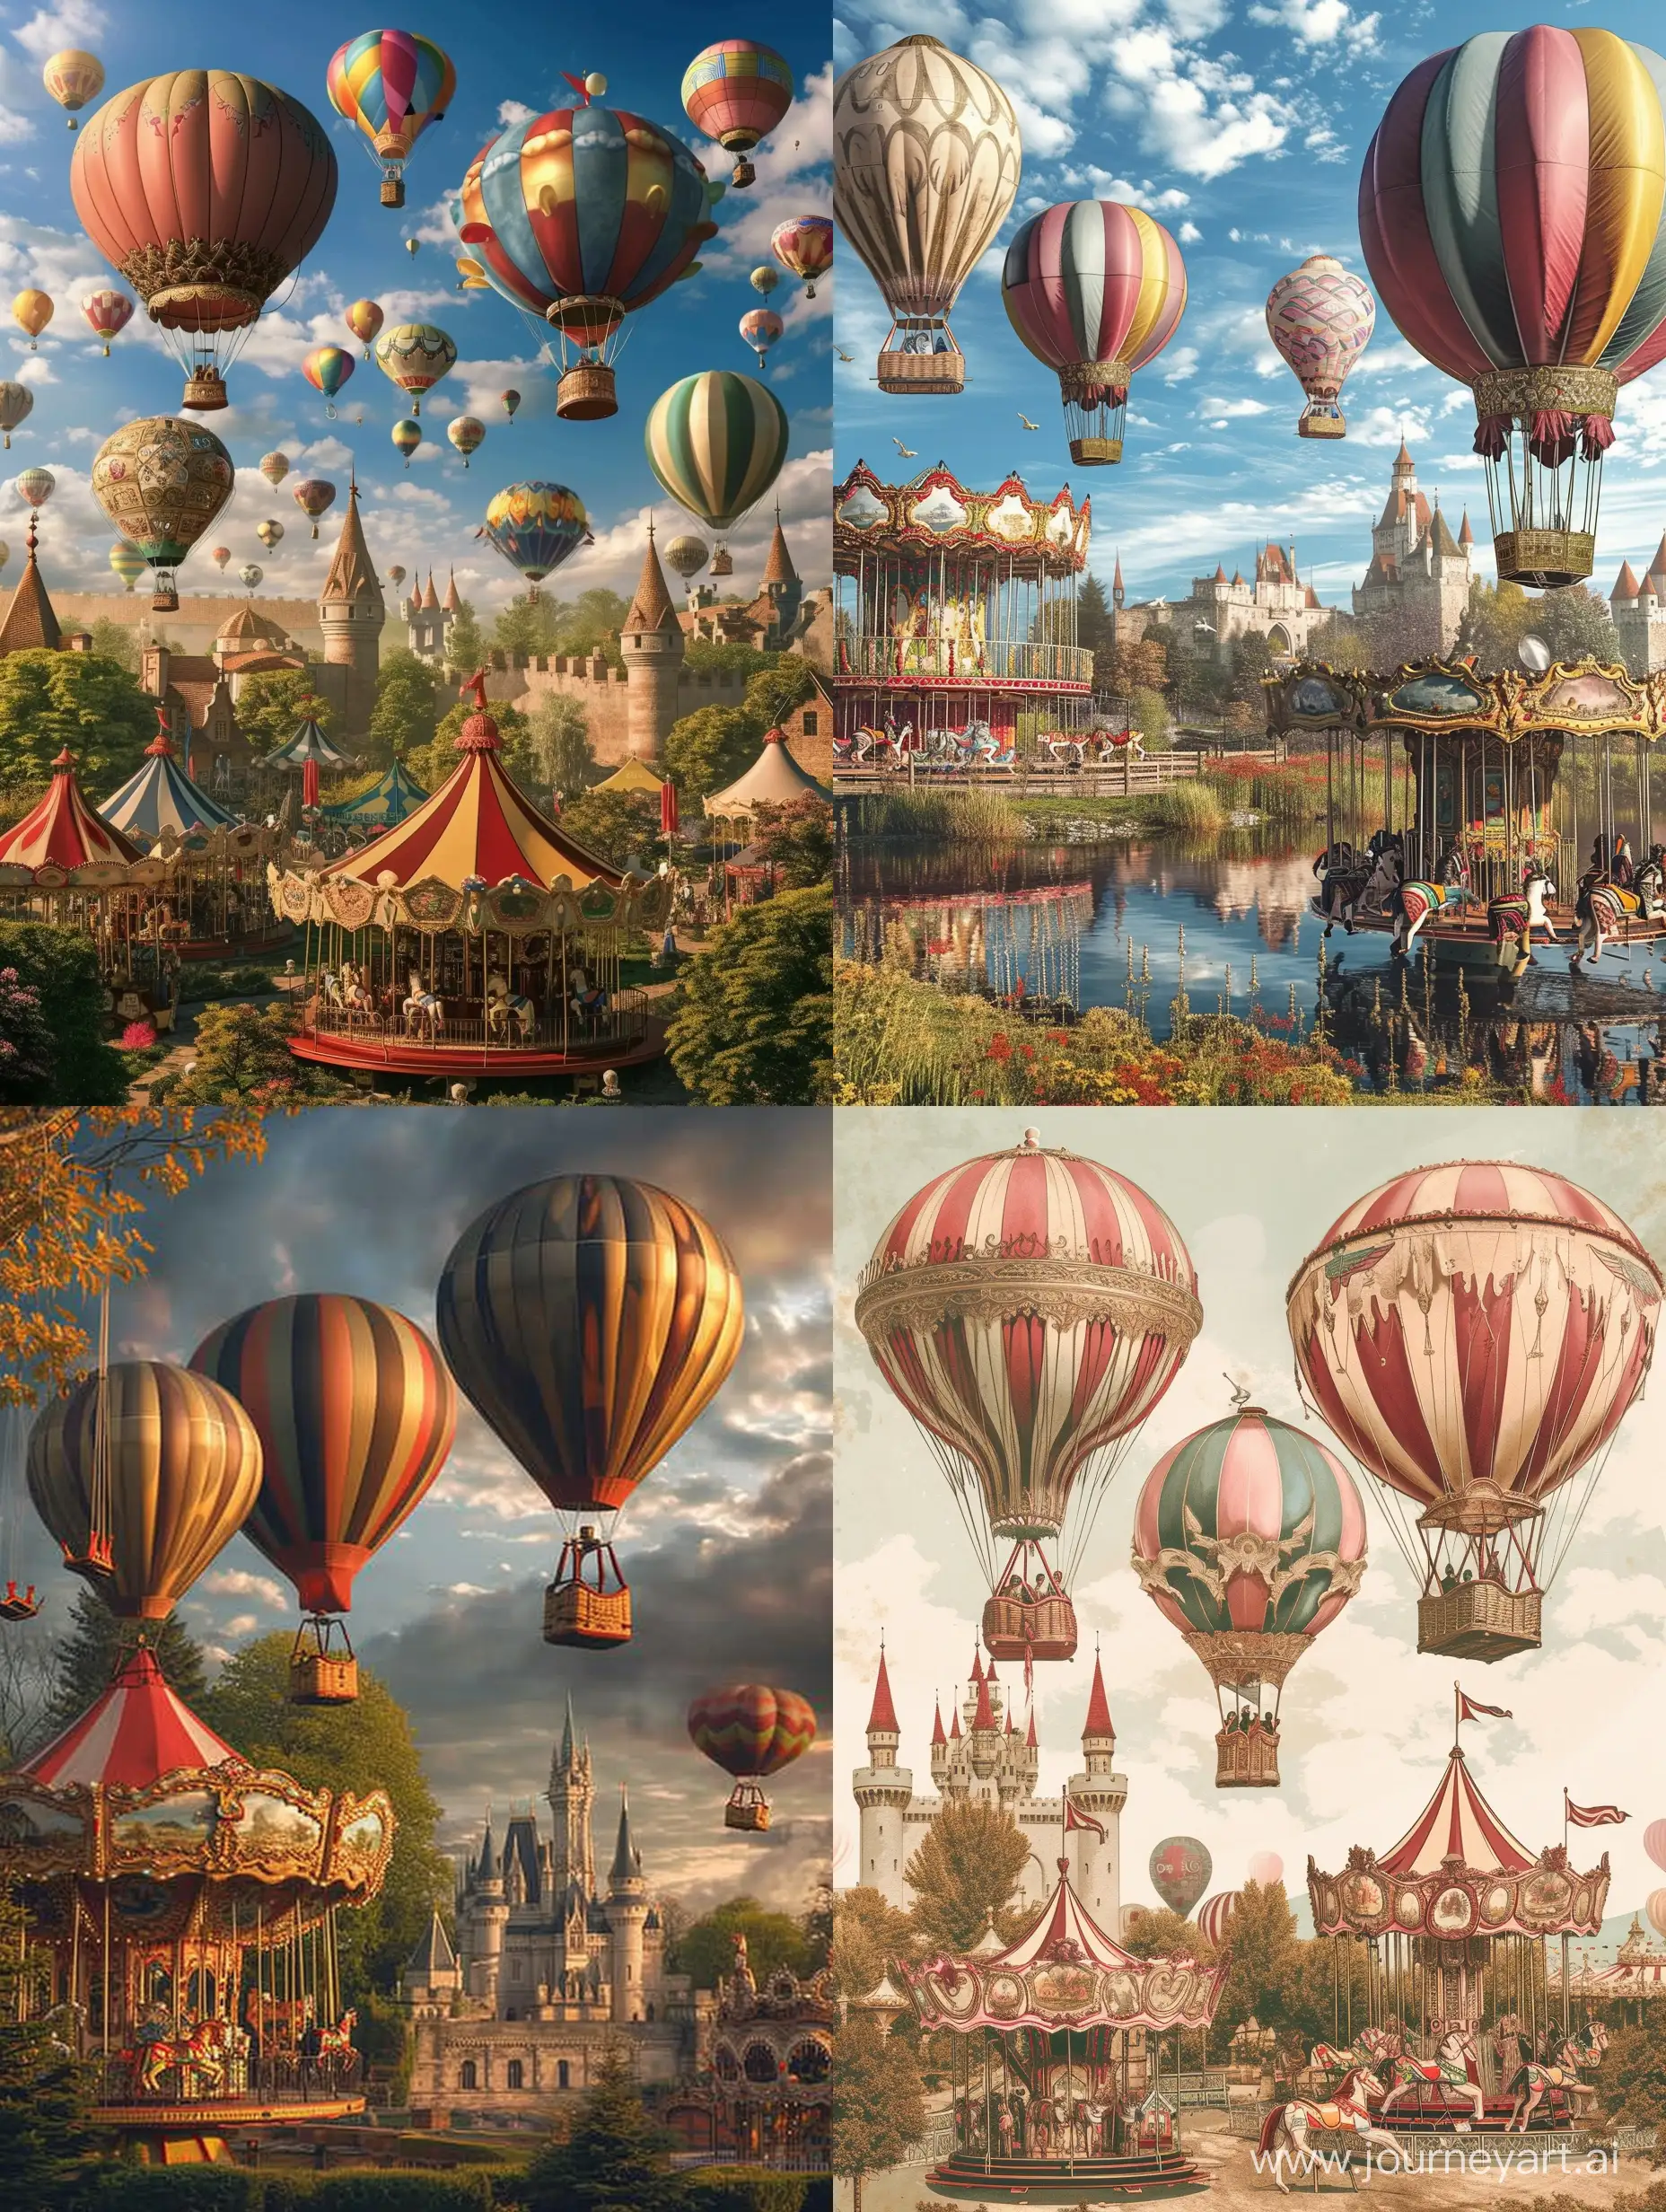 Amusement park, hot air balloons, carousel, castle.